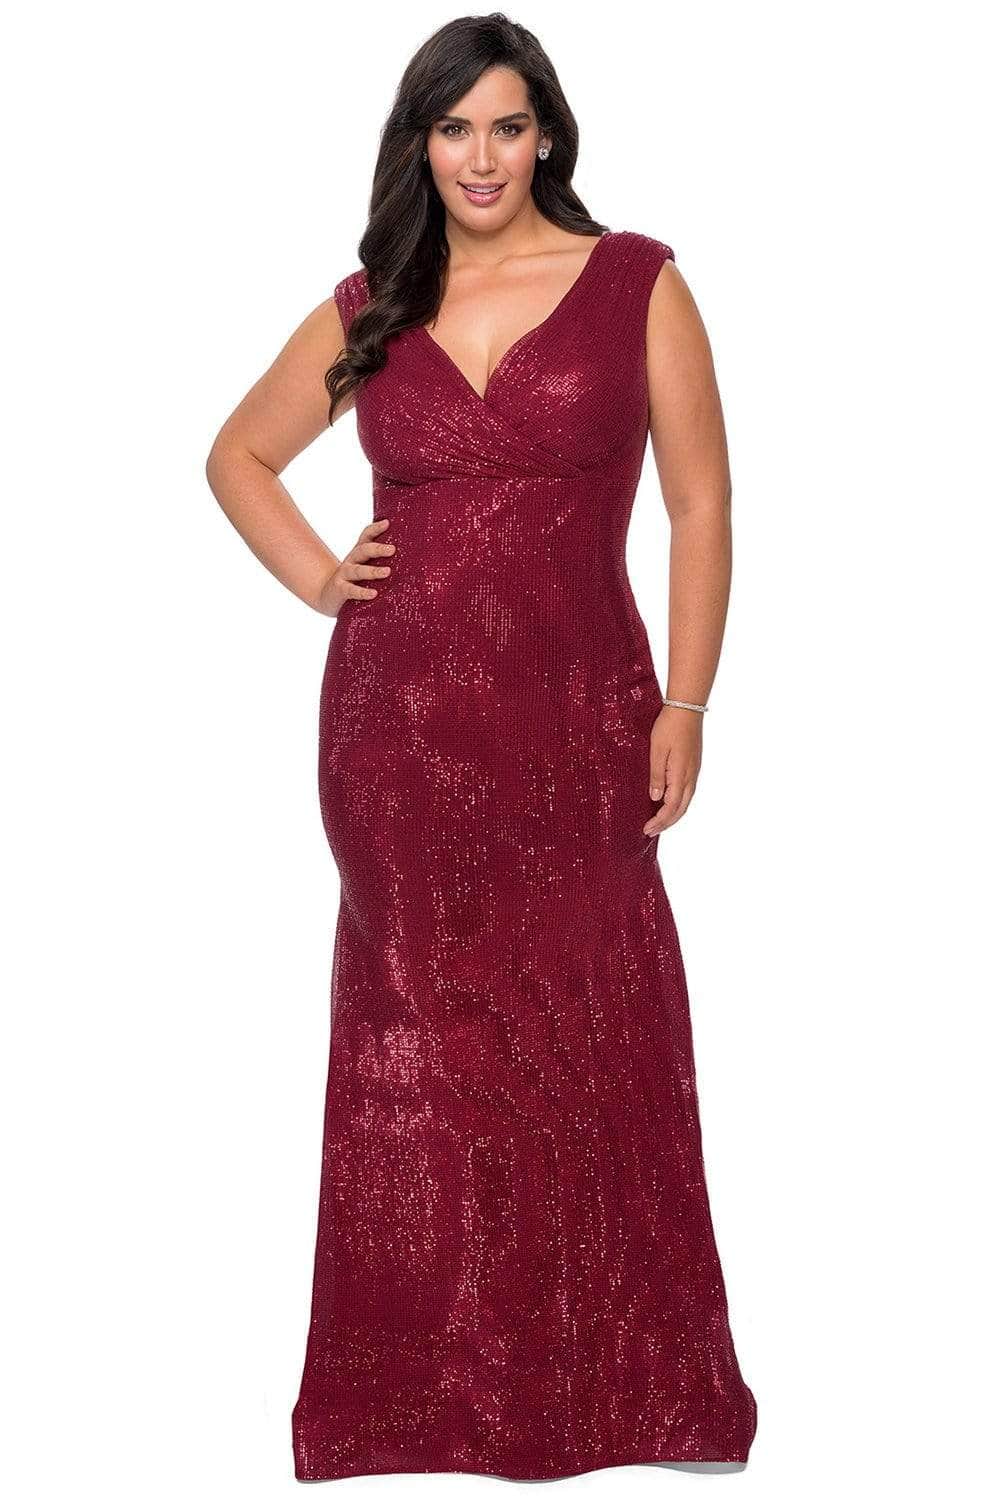 La Femme - Sequined Faux Wrap Gown 28962SC - 1 pc Wine In Size 12W Available CCSALE 12W / Wine